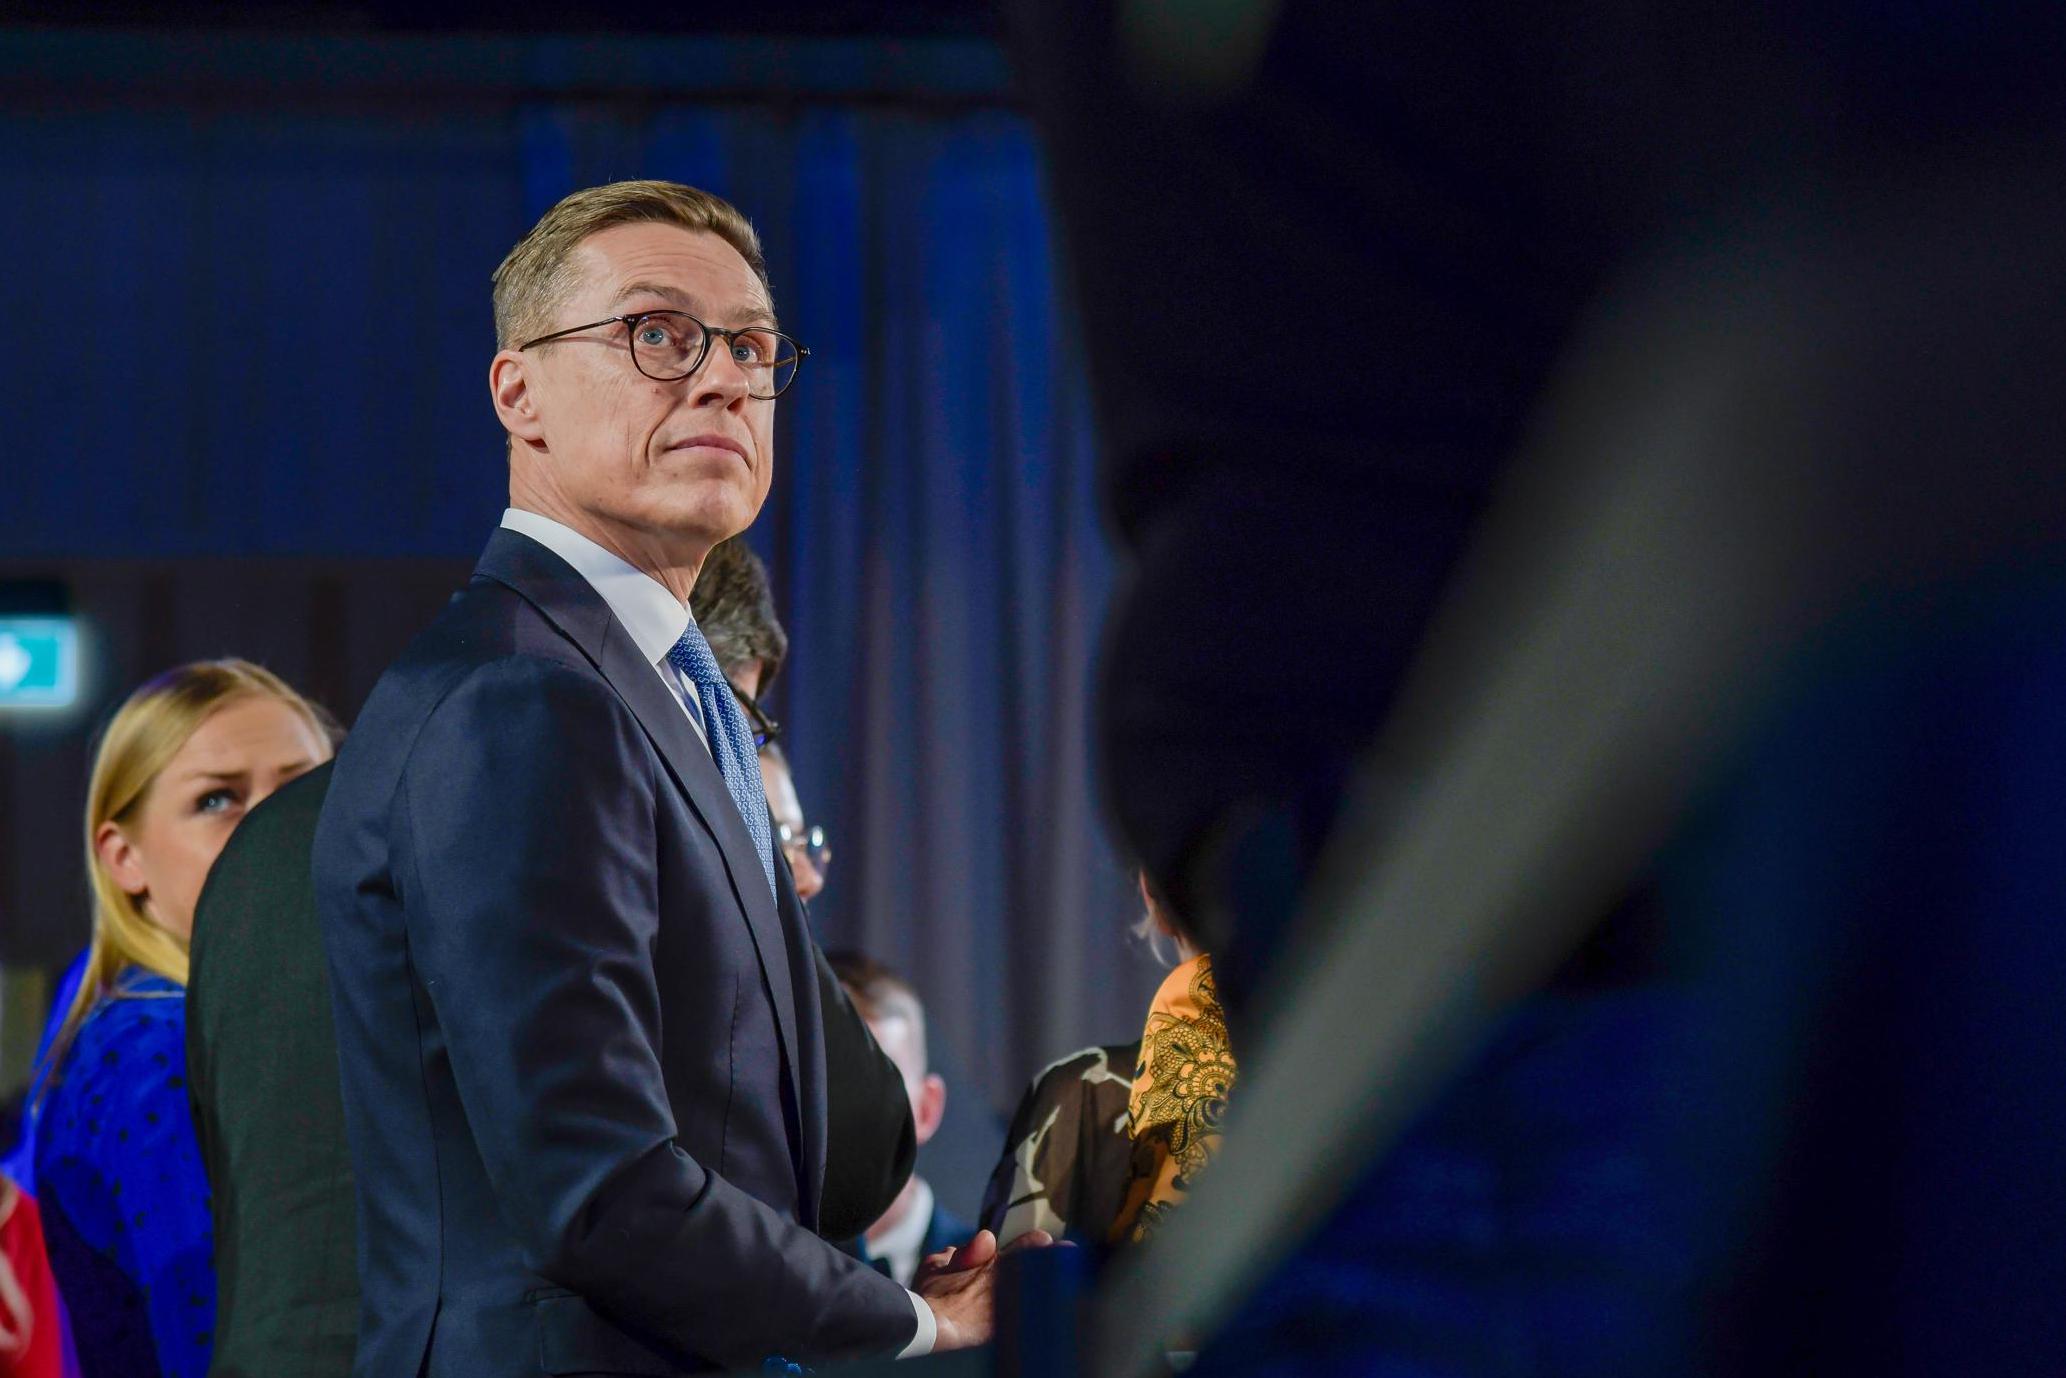 Finnish presidential election won by Alexander Stubb